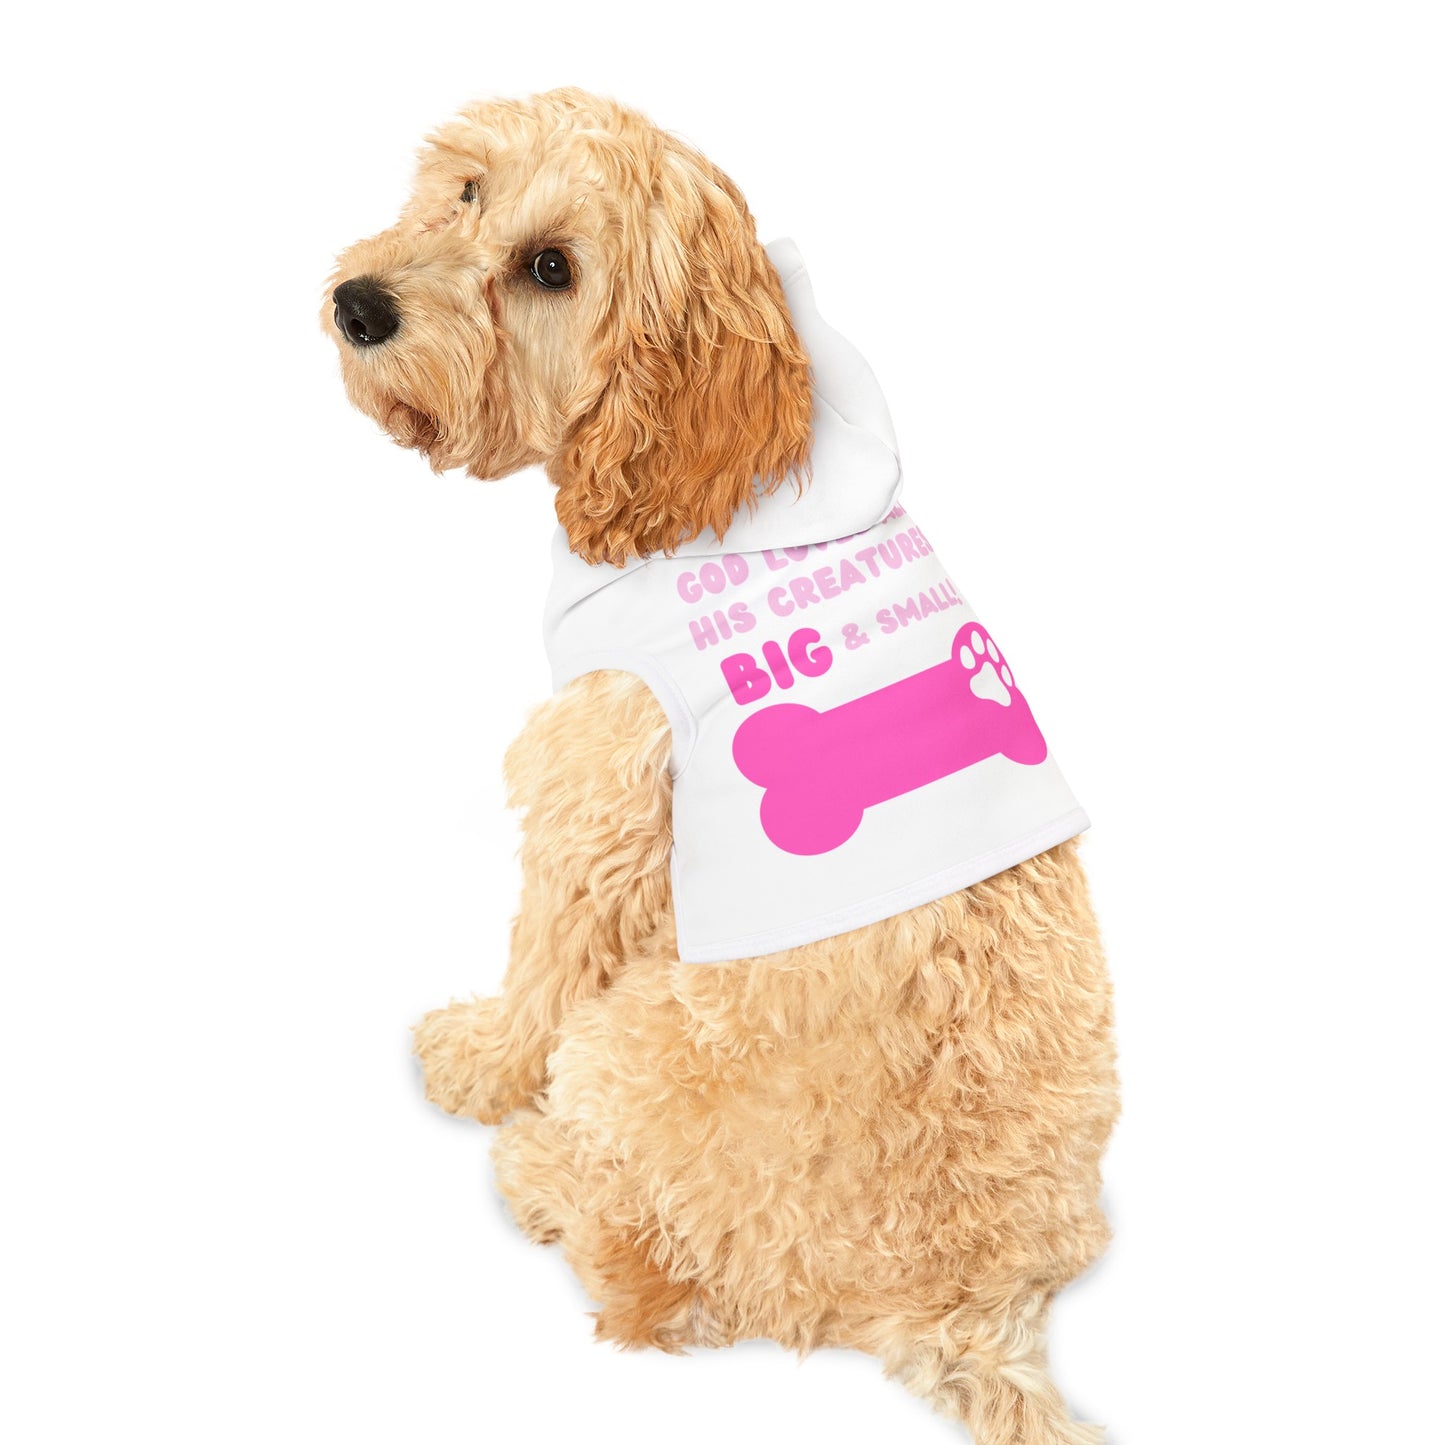 God Loves All Doggo Hoodie (Pink Logo)